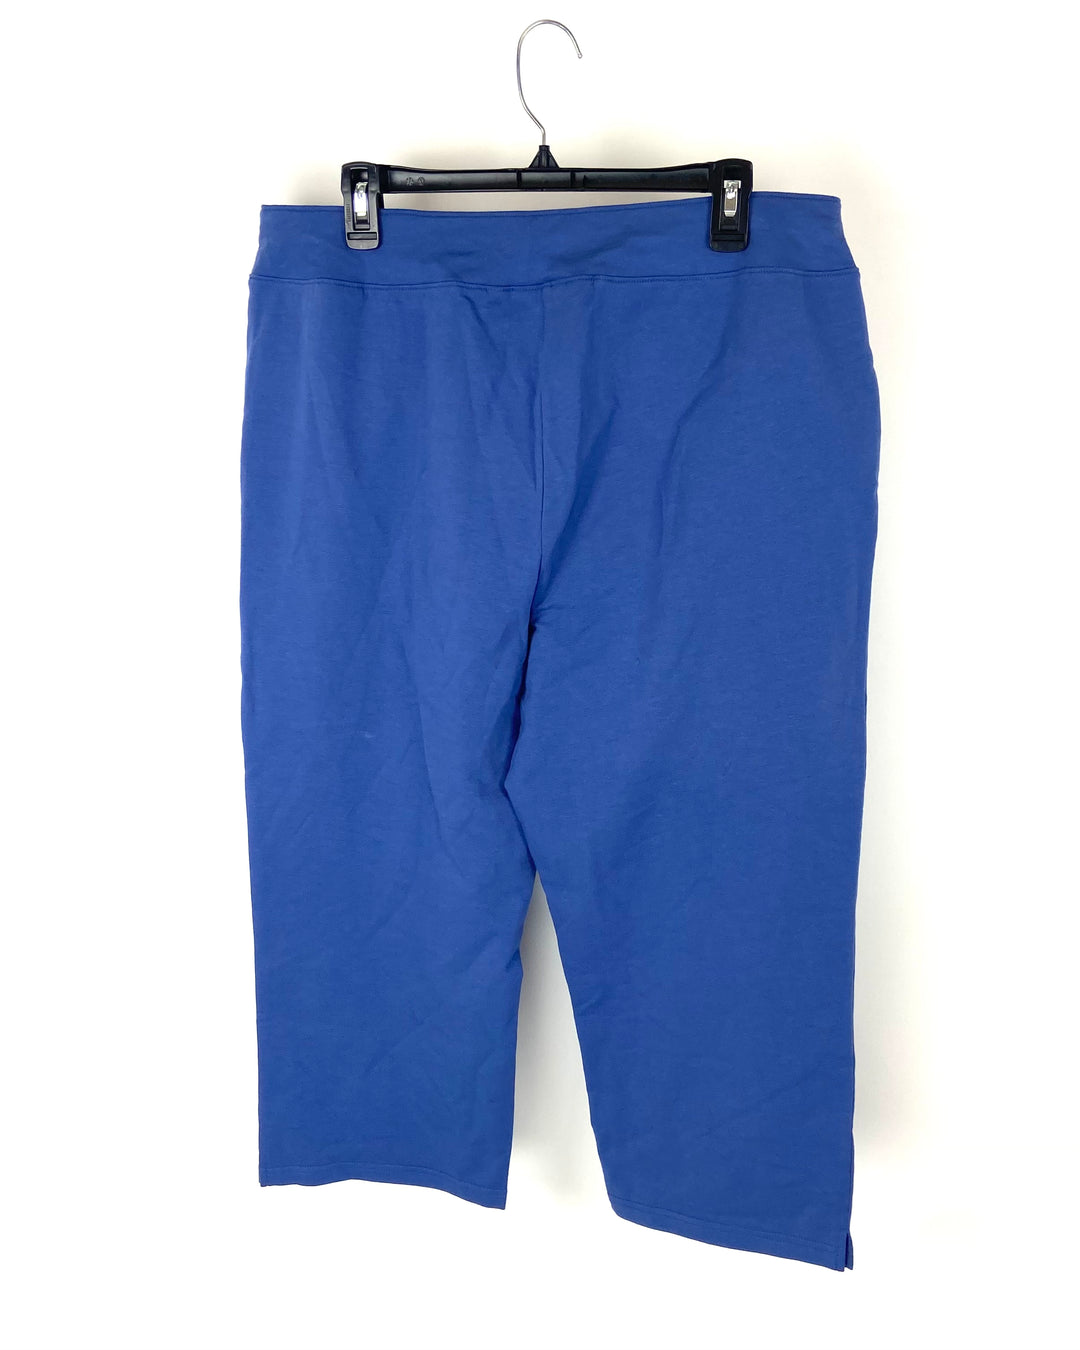 Blue Cropped Pants - Size 14-16